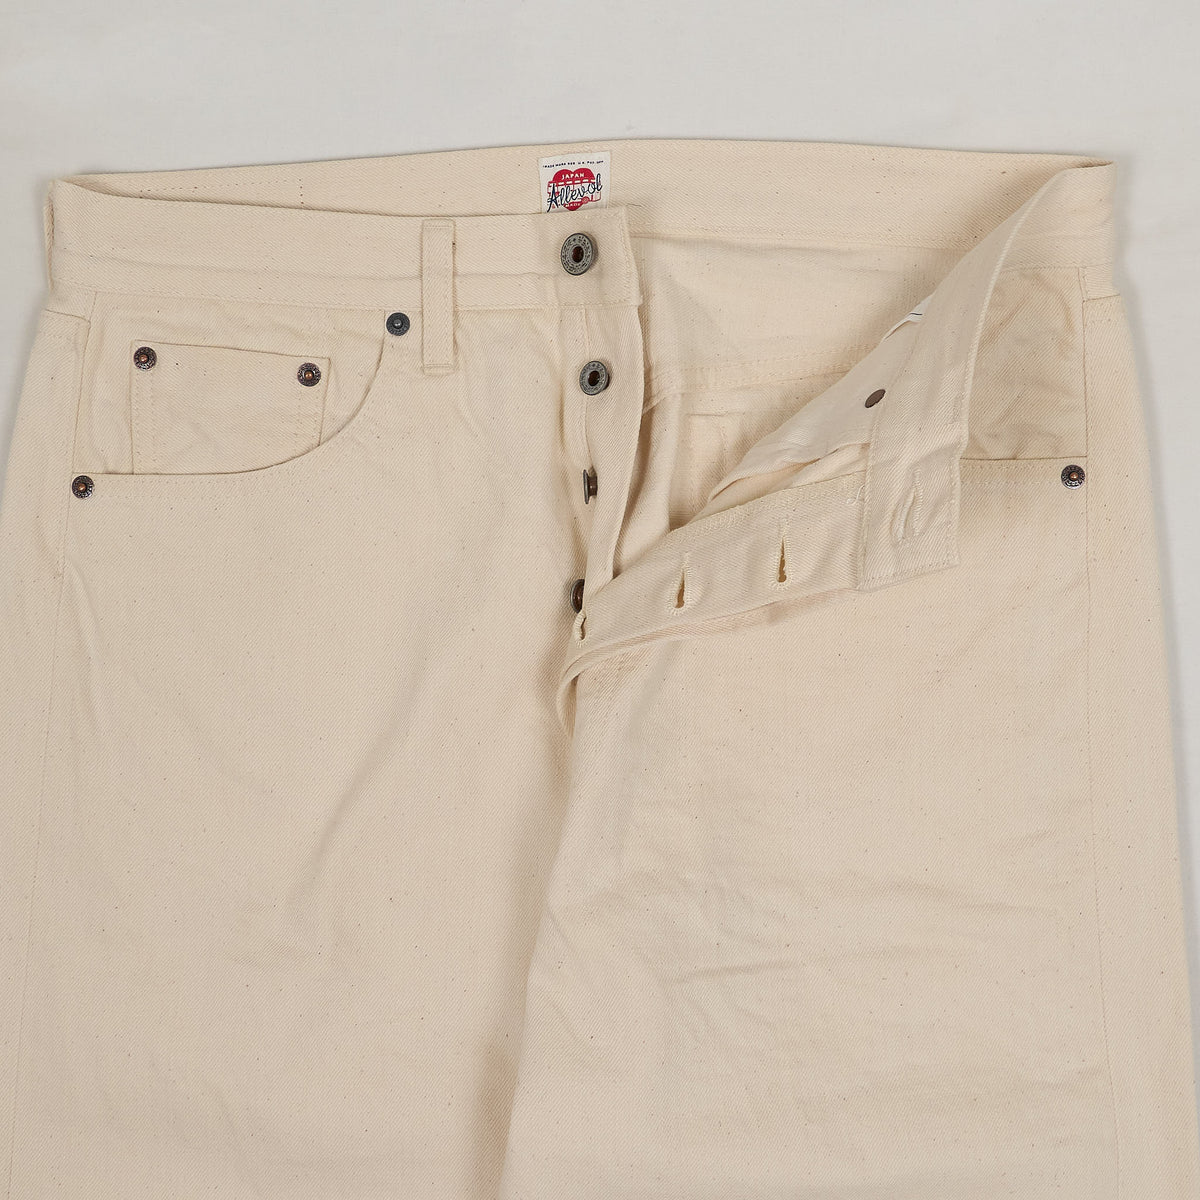 Allevol 5-Pocket Natural Straight Leg Selvage 5 Pocket Jeans